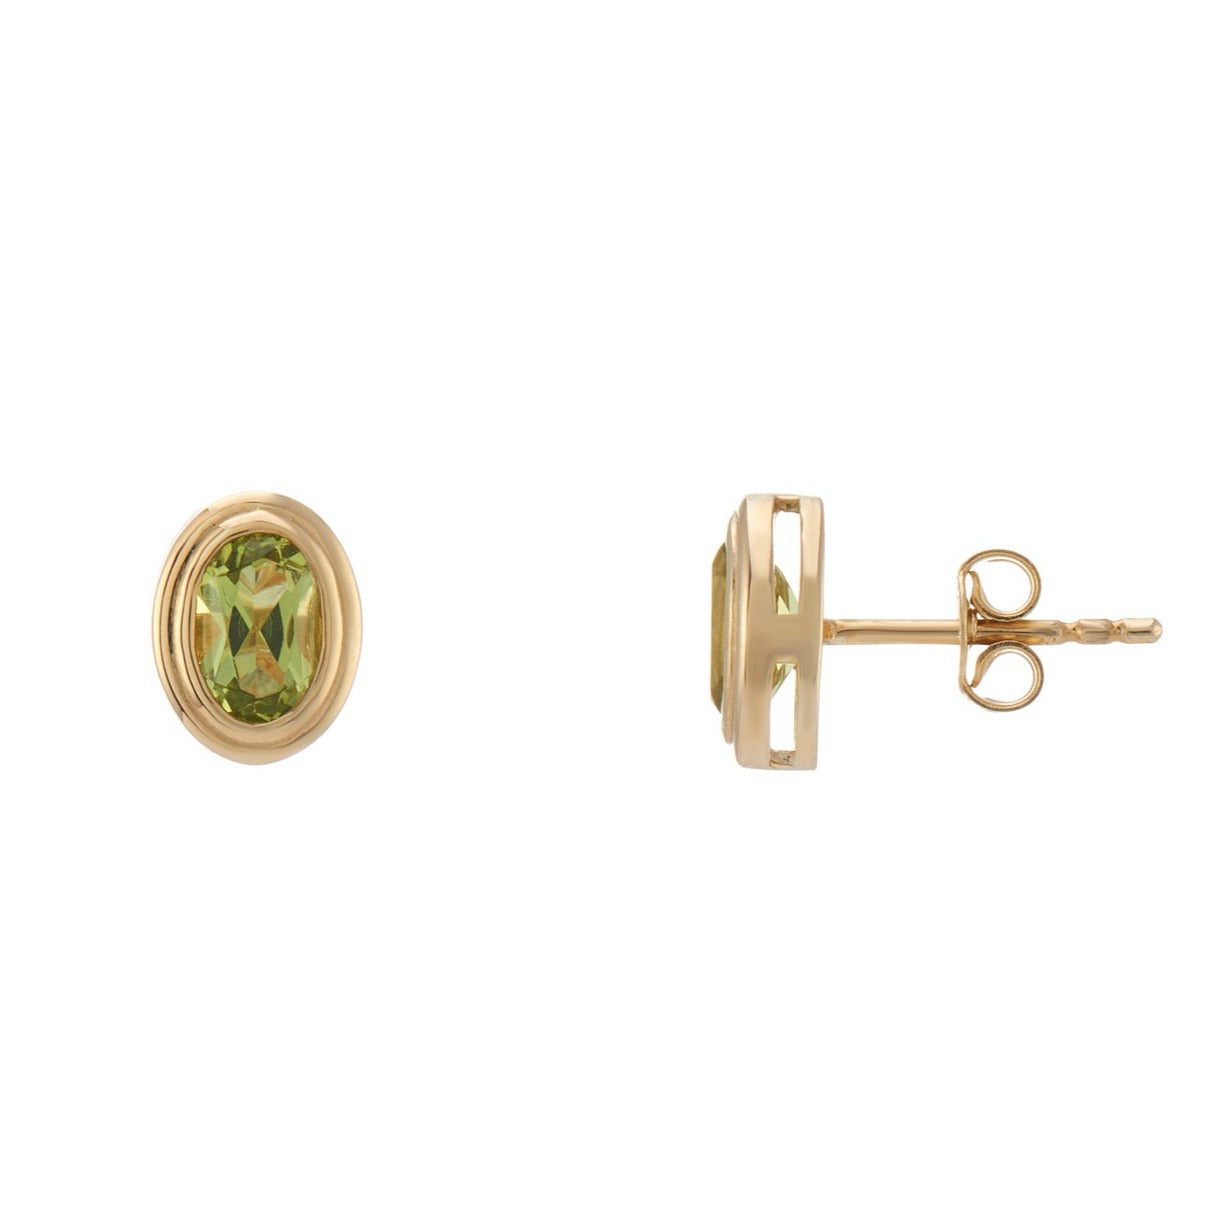 9ct gold 6x4mm oval rub over set peridot stud earrings